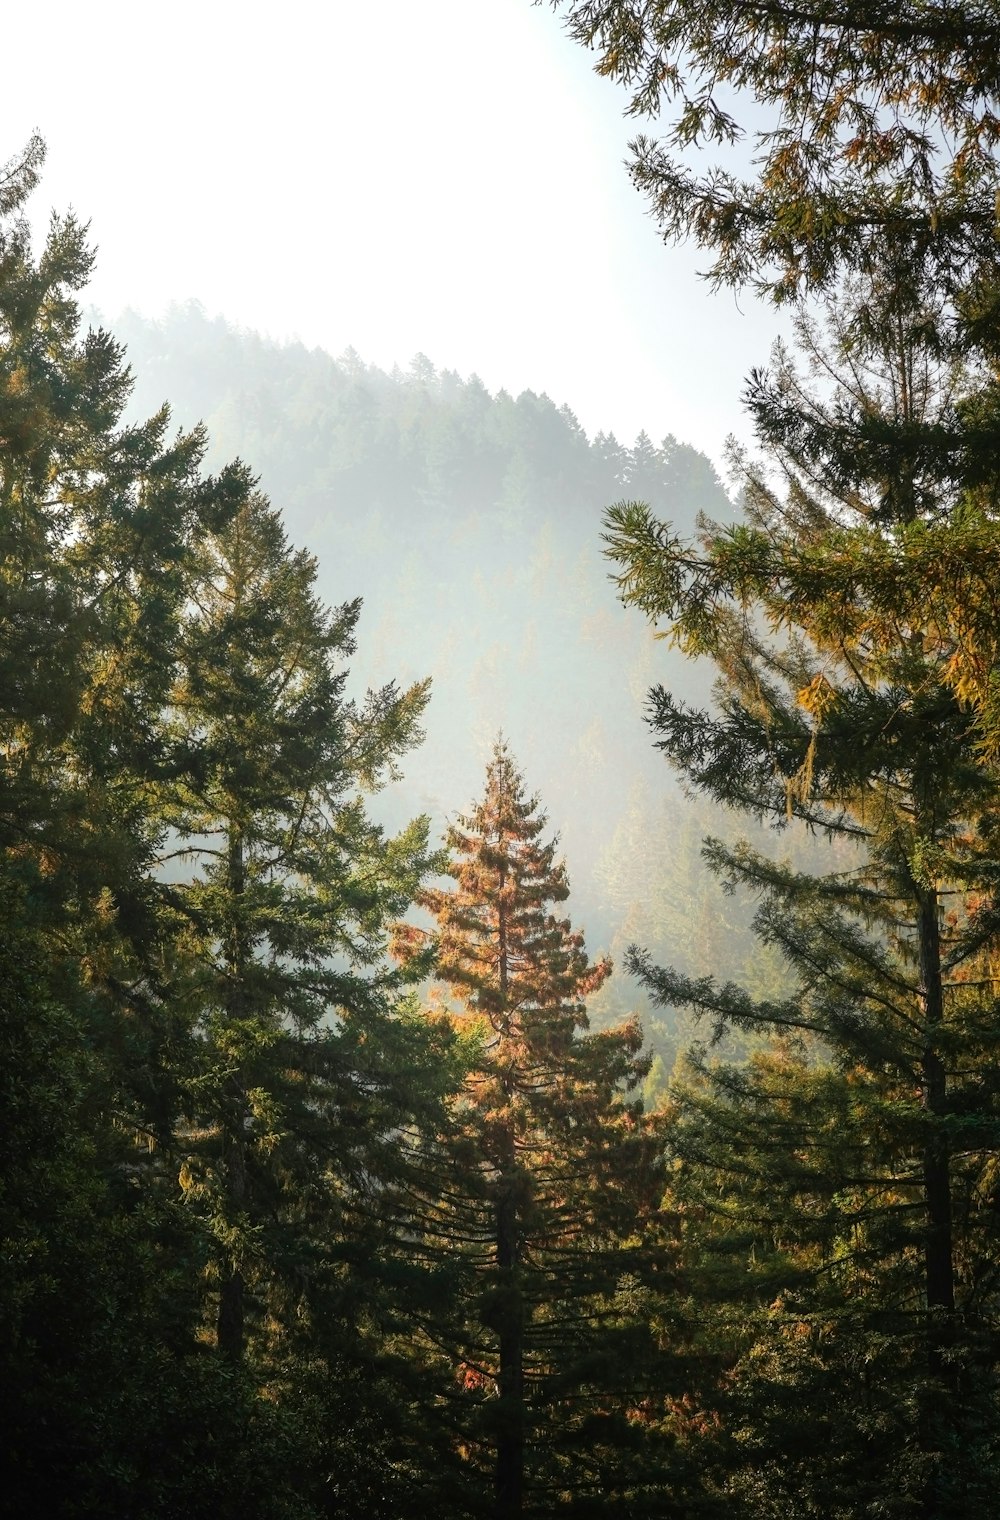 green pine trees under white sky during daytime